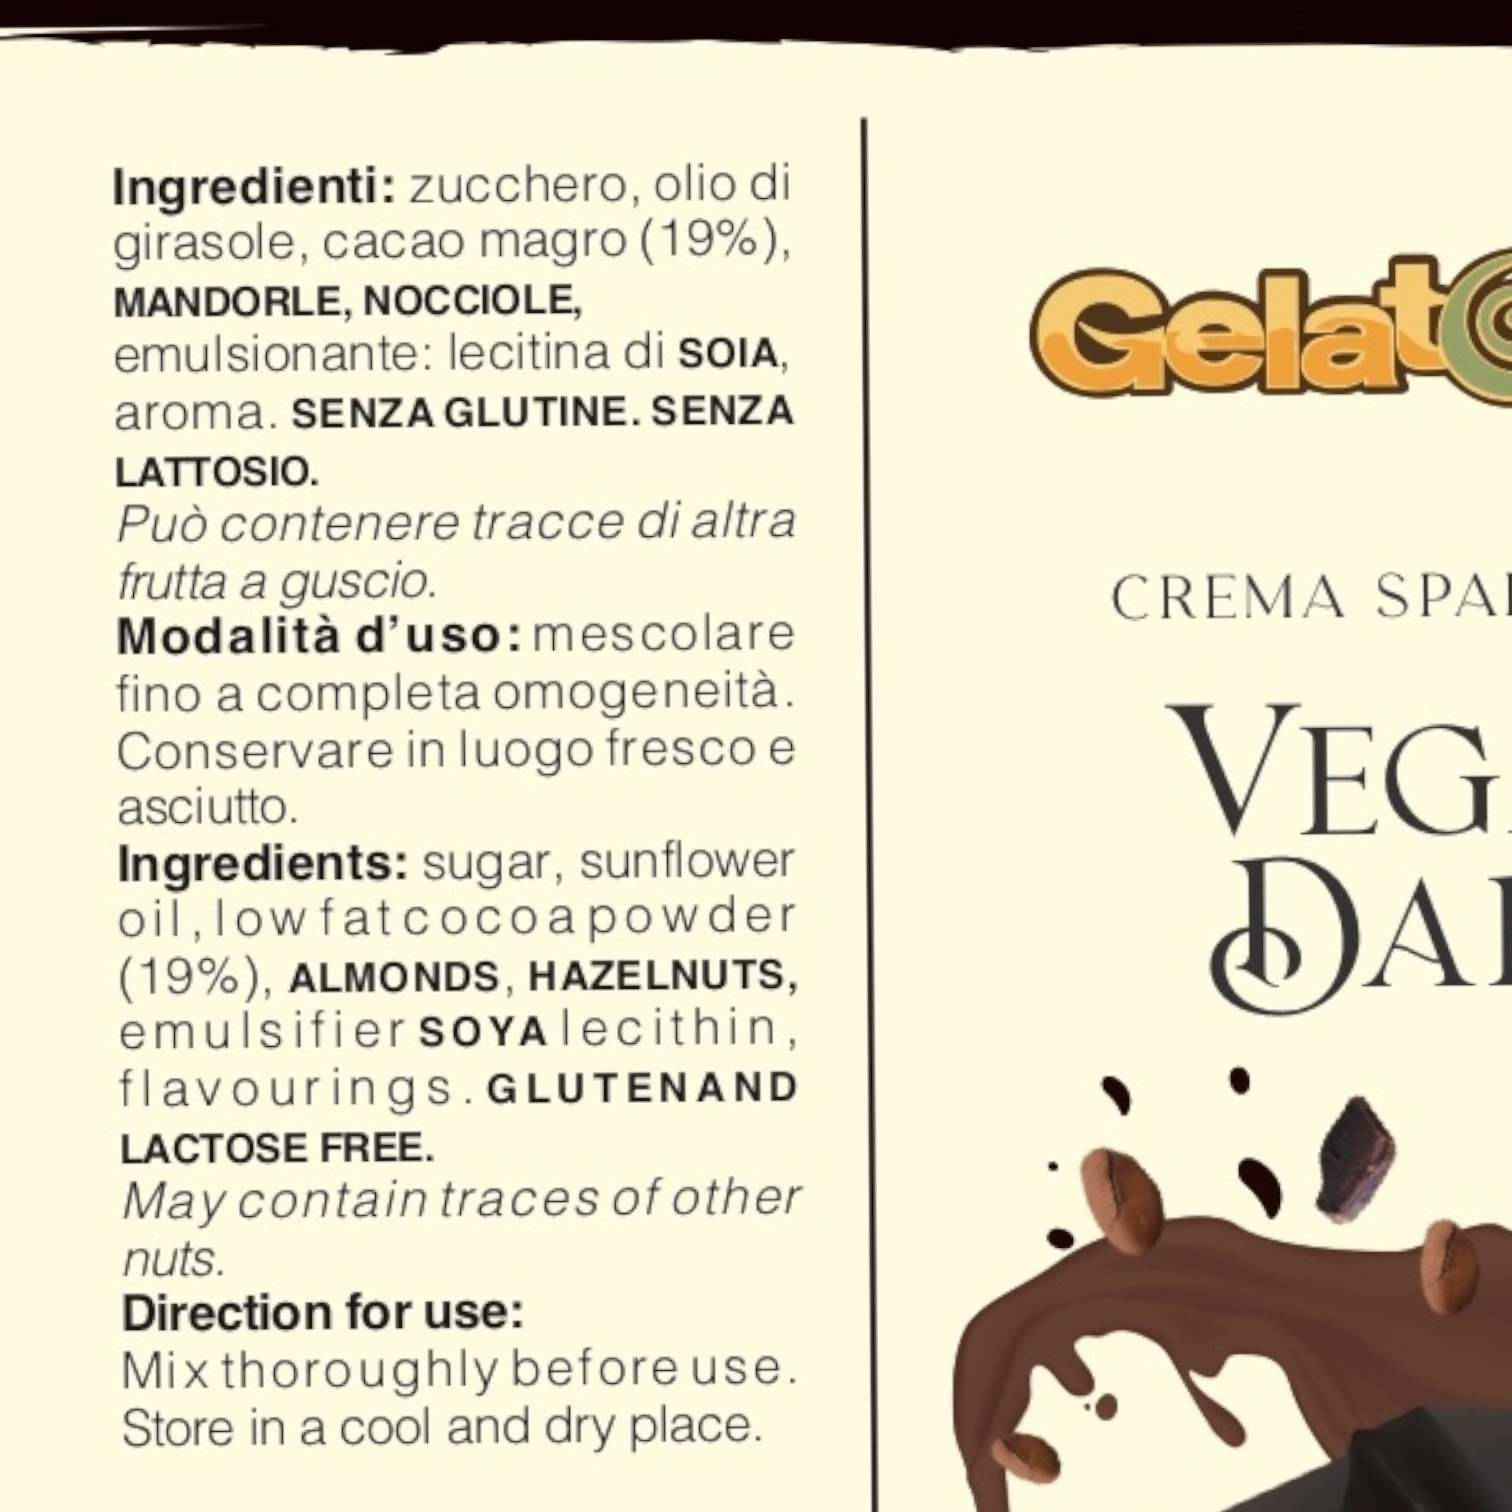 Ricarica Crema Vegan Dark per "Fontana ChocoParty"